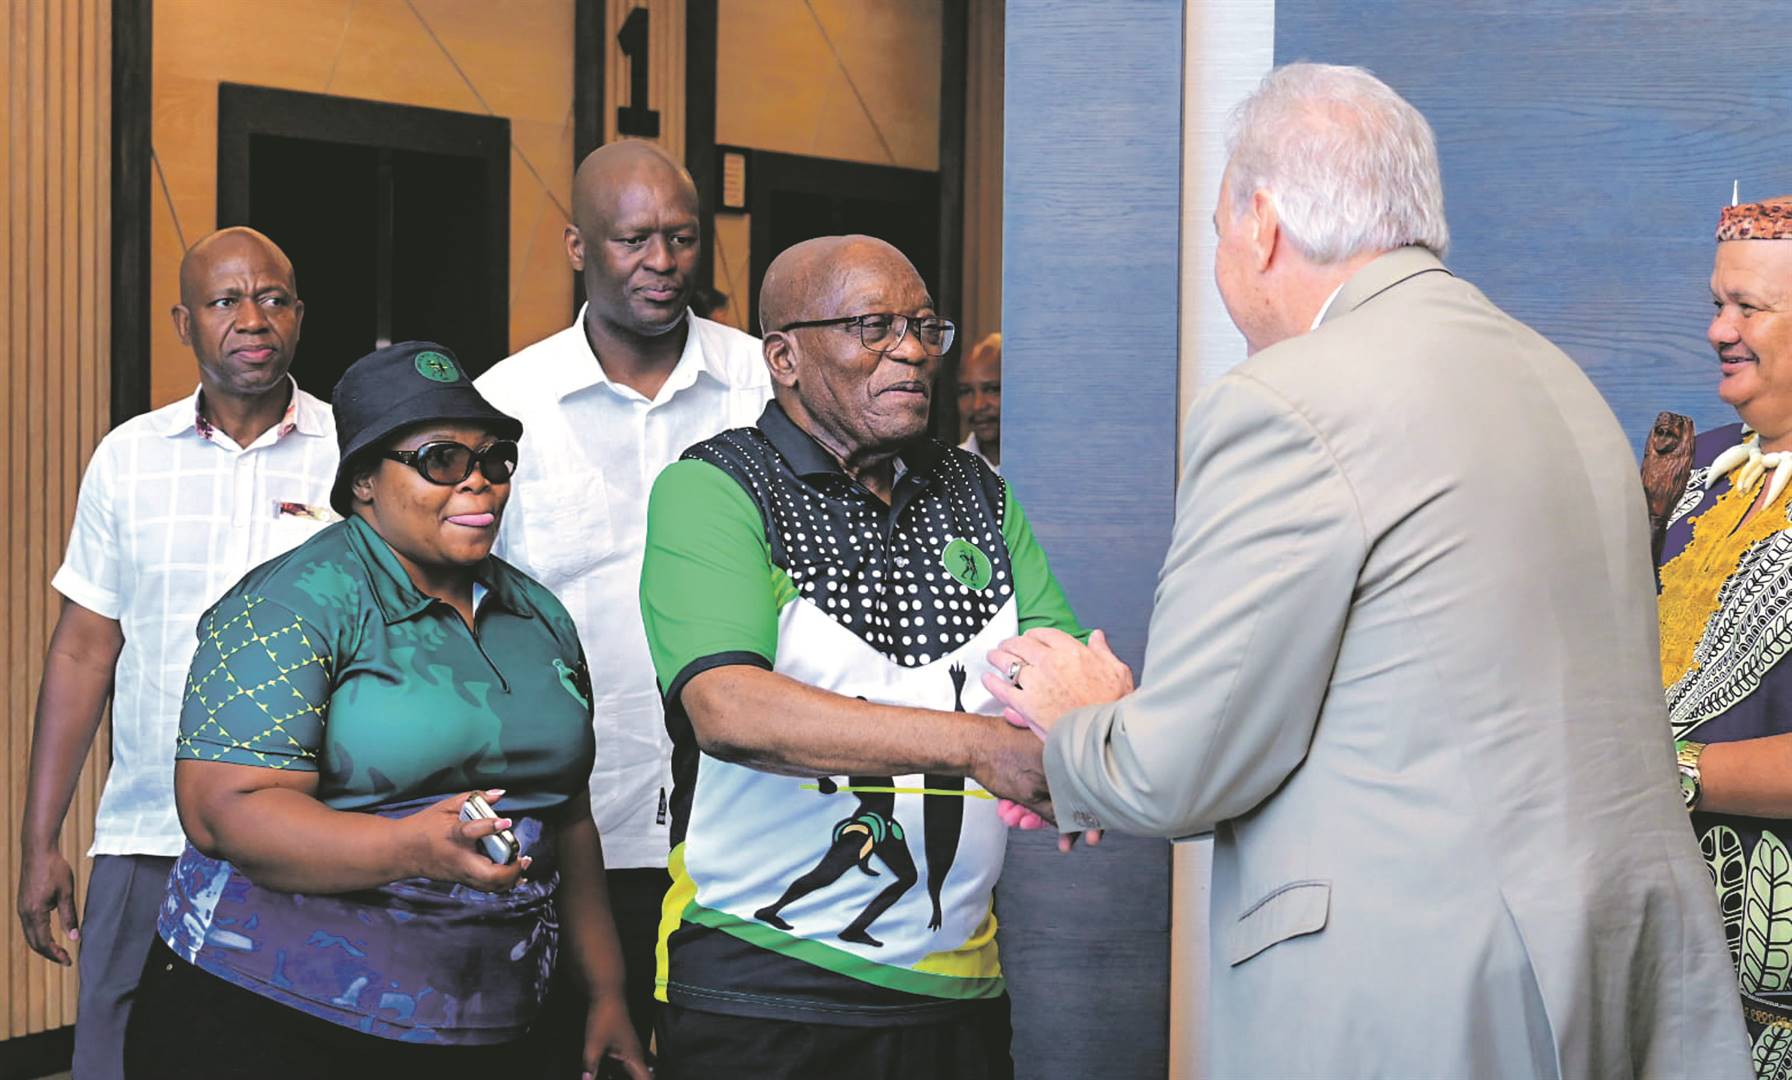 Former president Jacob Zuma and his uMkhonto weSizwe (MK) Party addressed an “Afrikaner leadership forum” in Pretoria last week